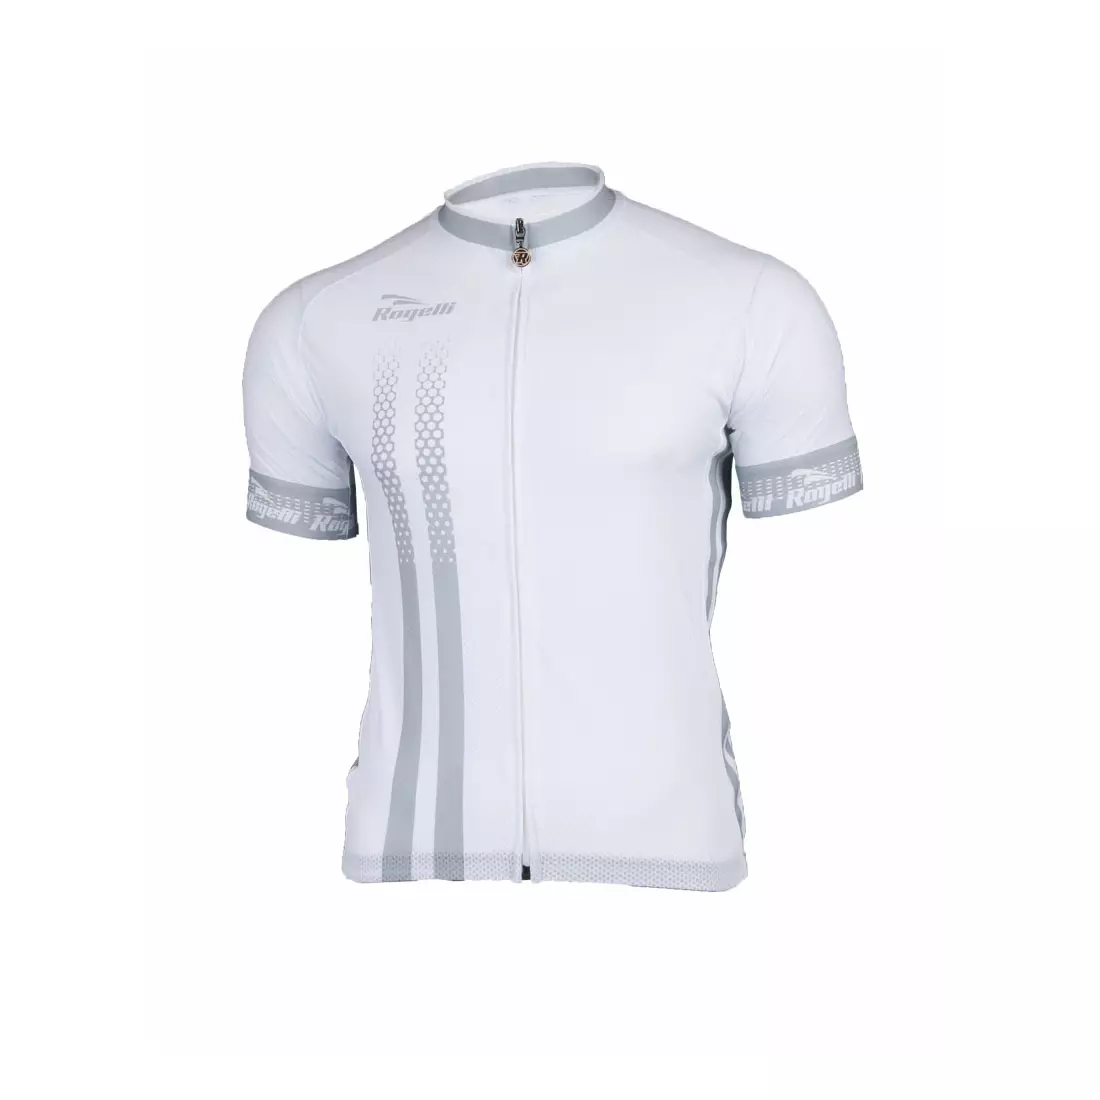 ROGELLI USCIO - ultralight men's cycling jersey